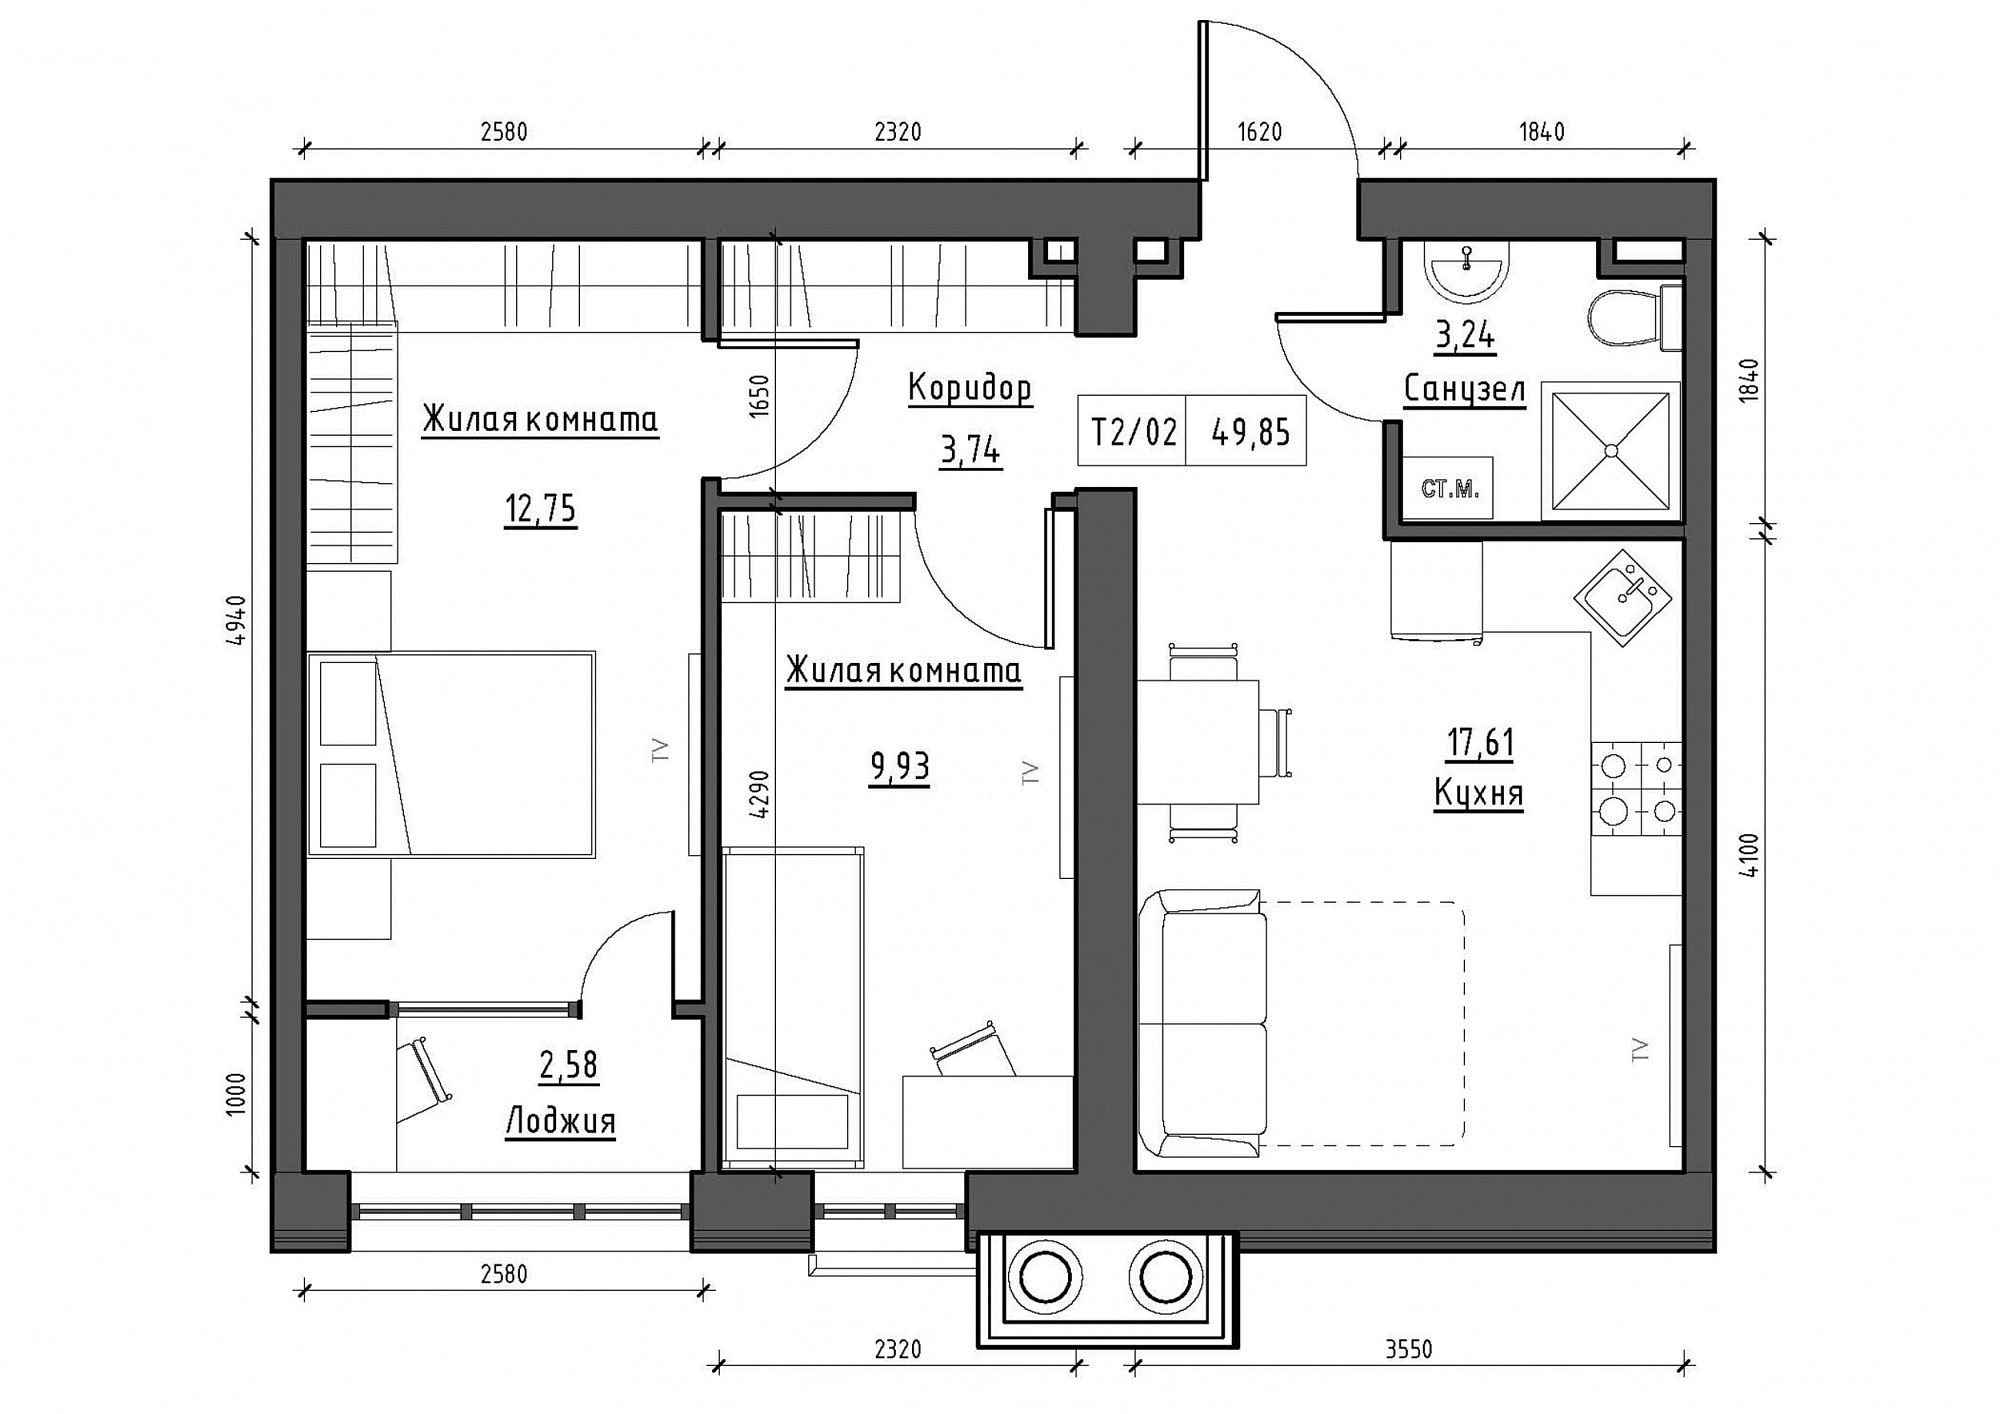 Planning 2-rm flats area 49.85m2, KS-011-01/0009.